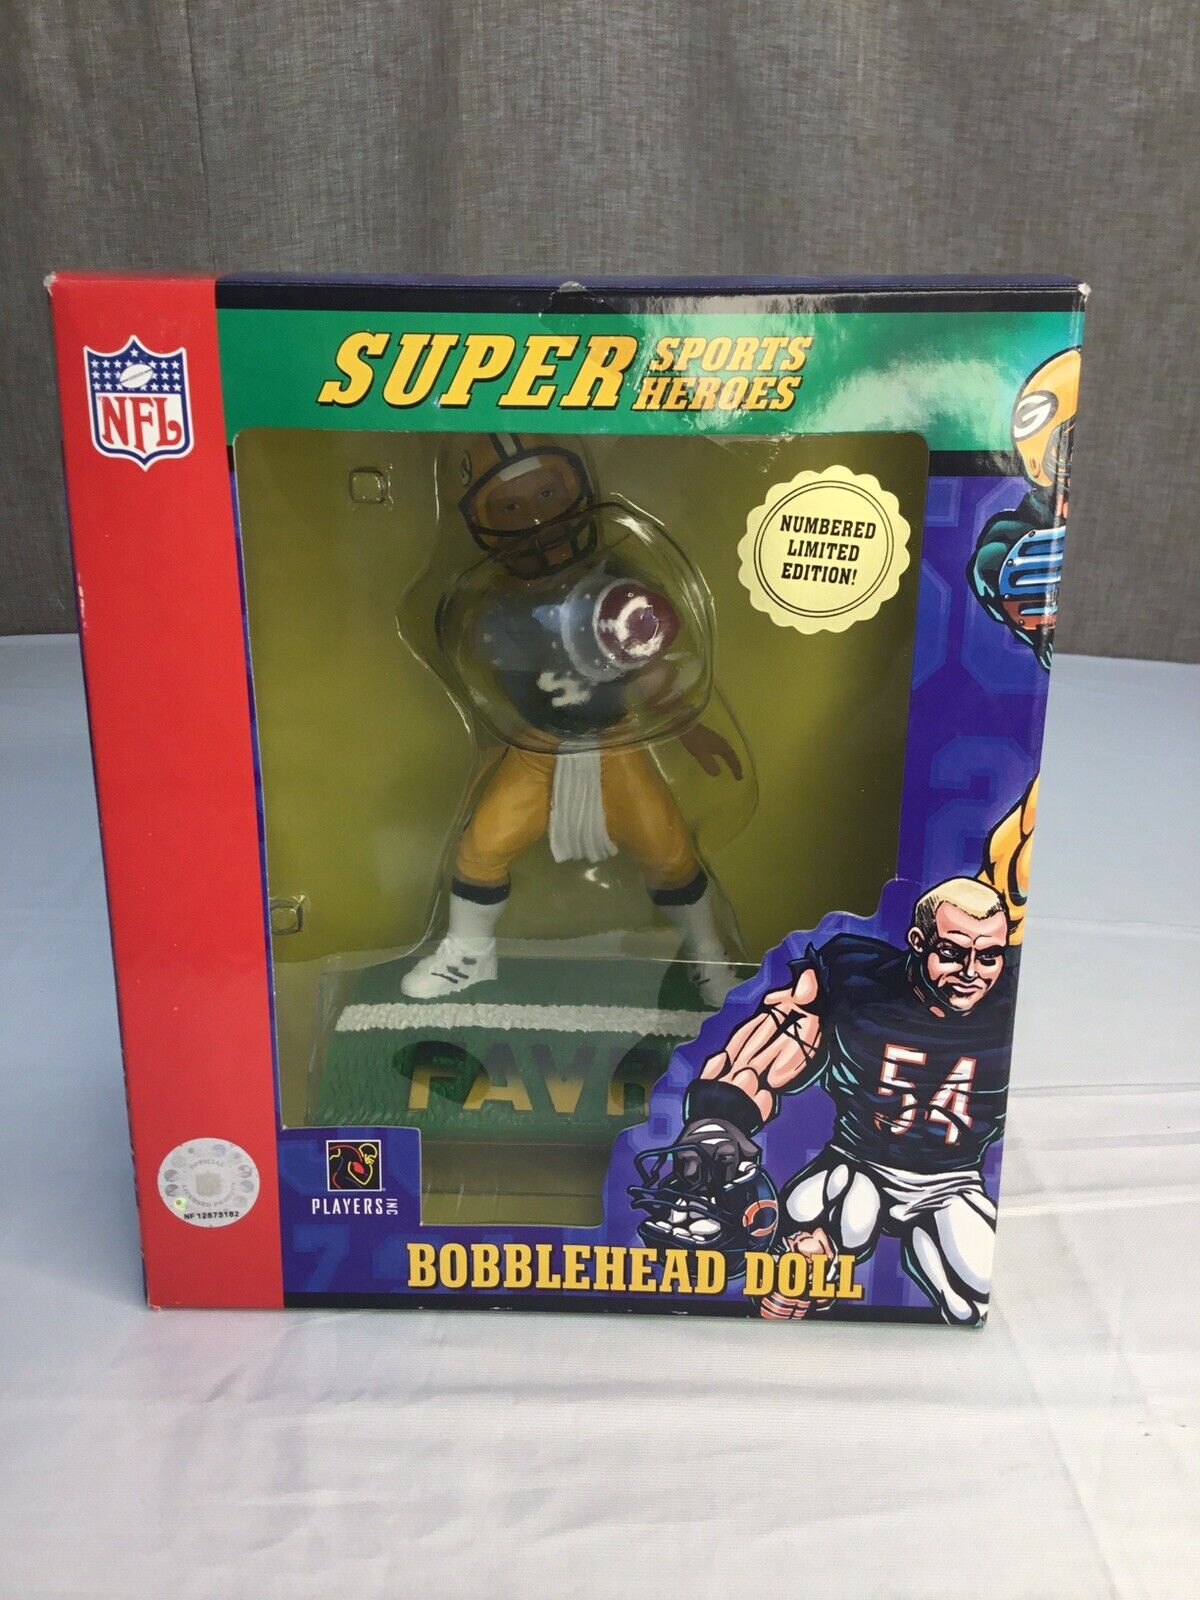 Brett Favre Super Sports Heroes Bobblehead Doll